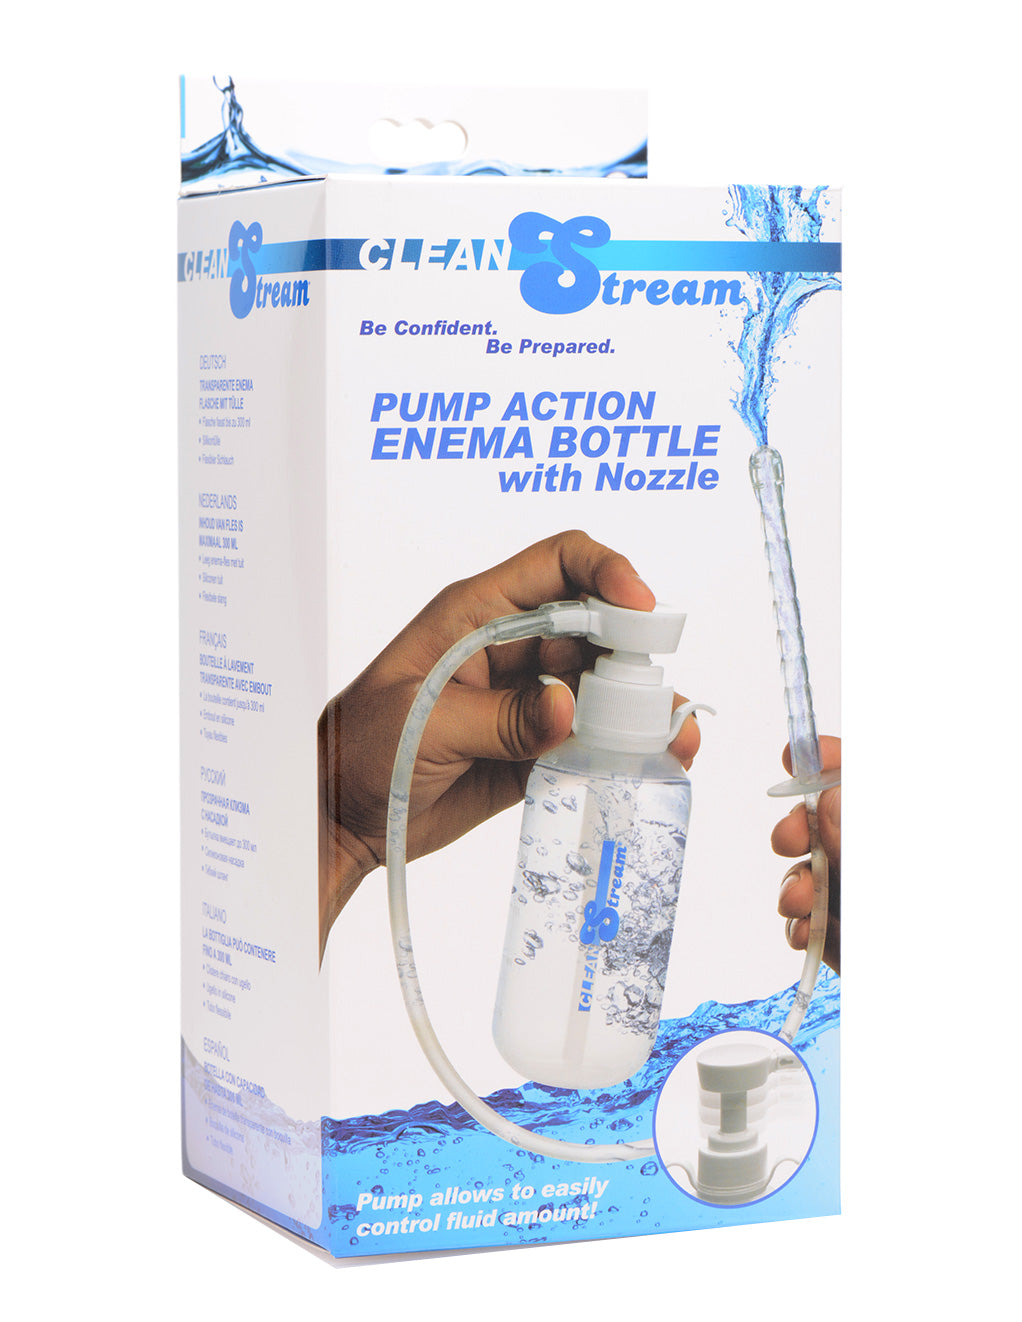 Clean Stream Pump Action Enema Bottle With Nozzle Box Front